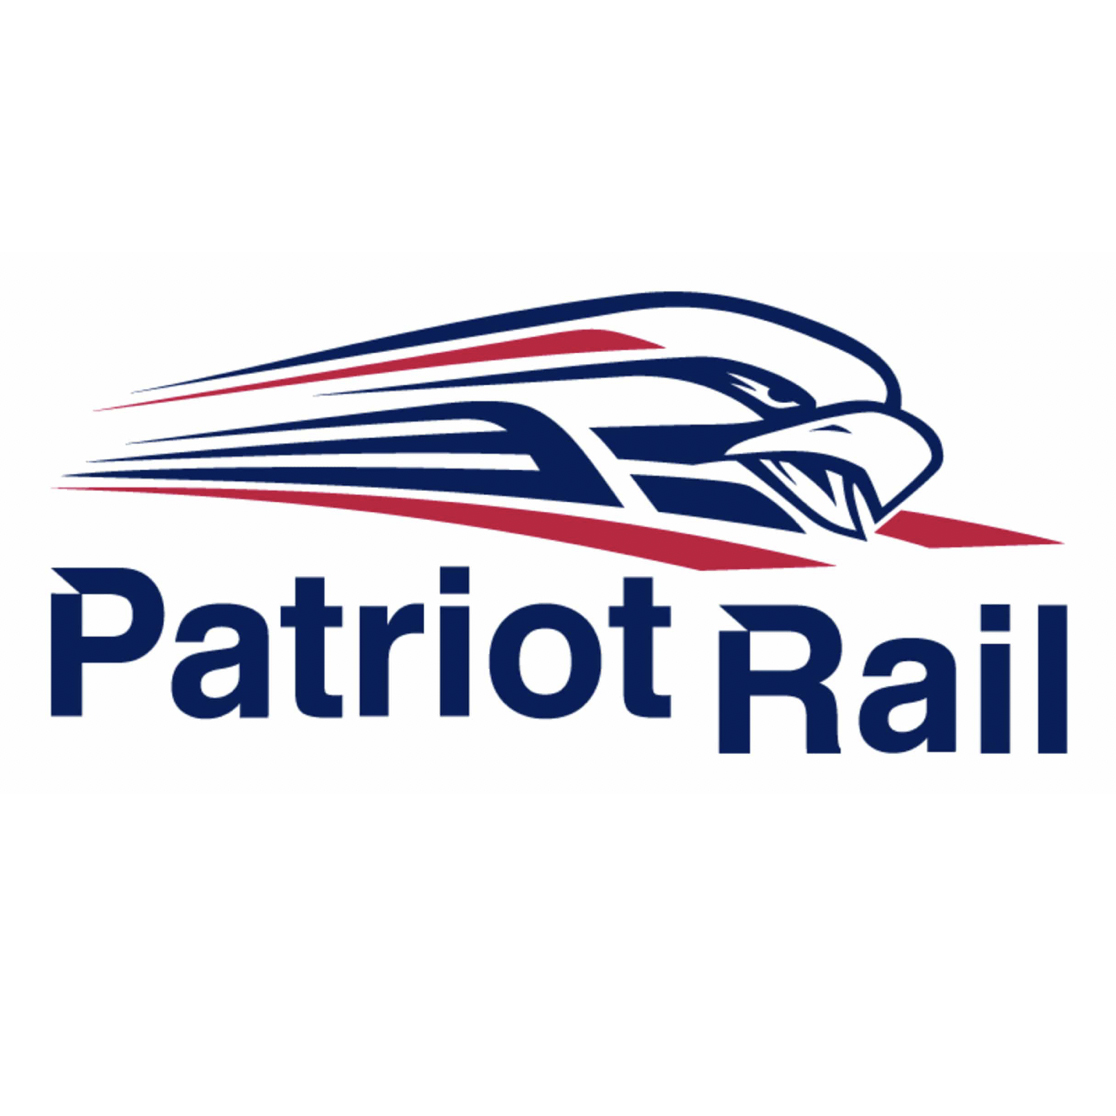 Patriot Rail logo